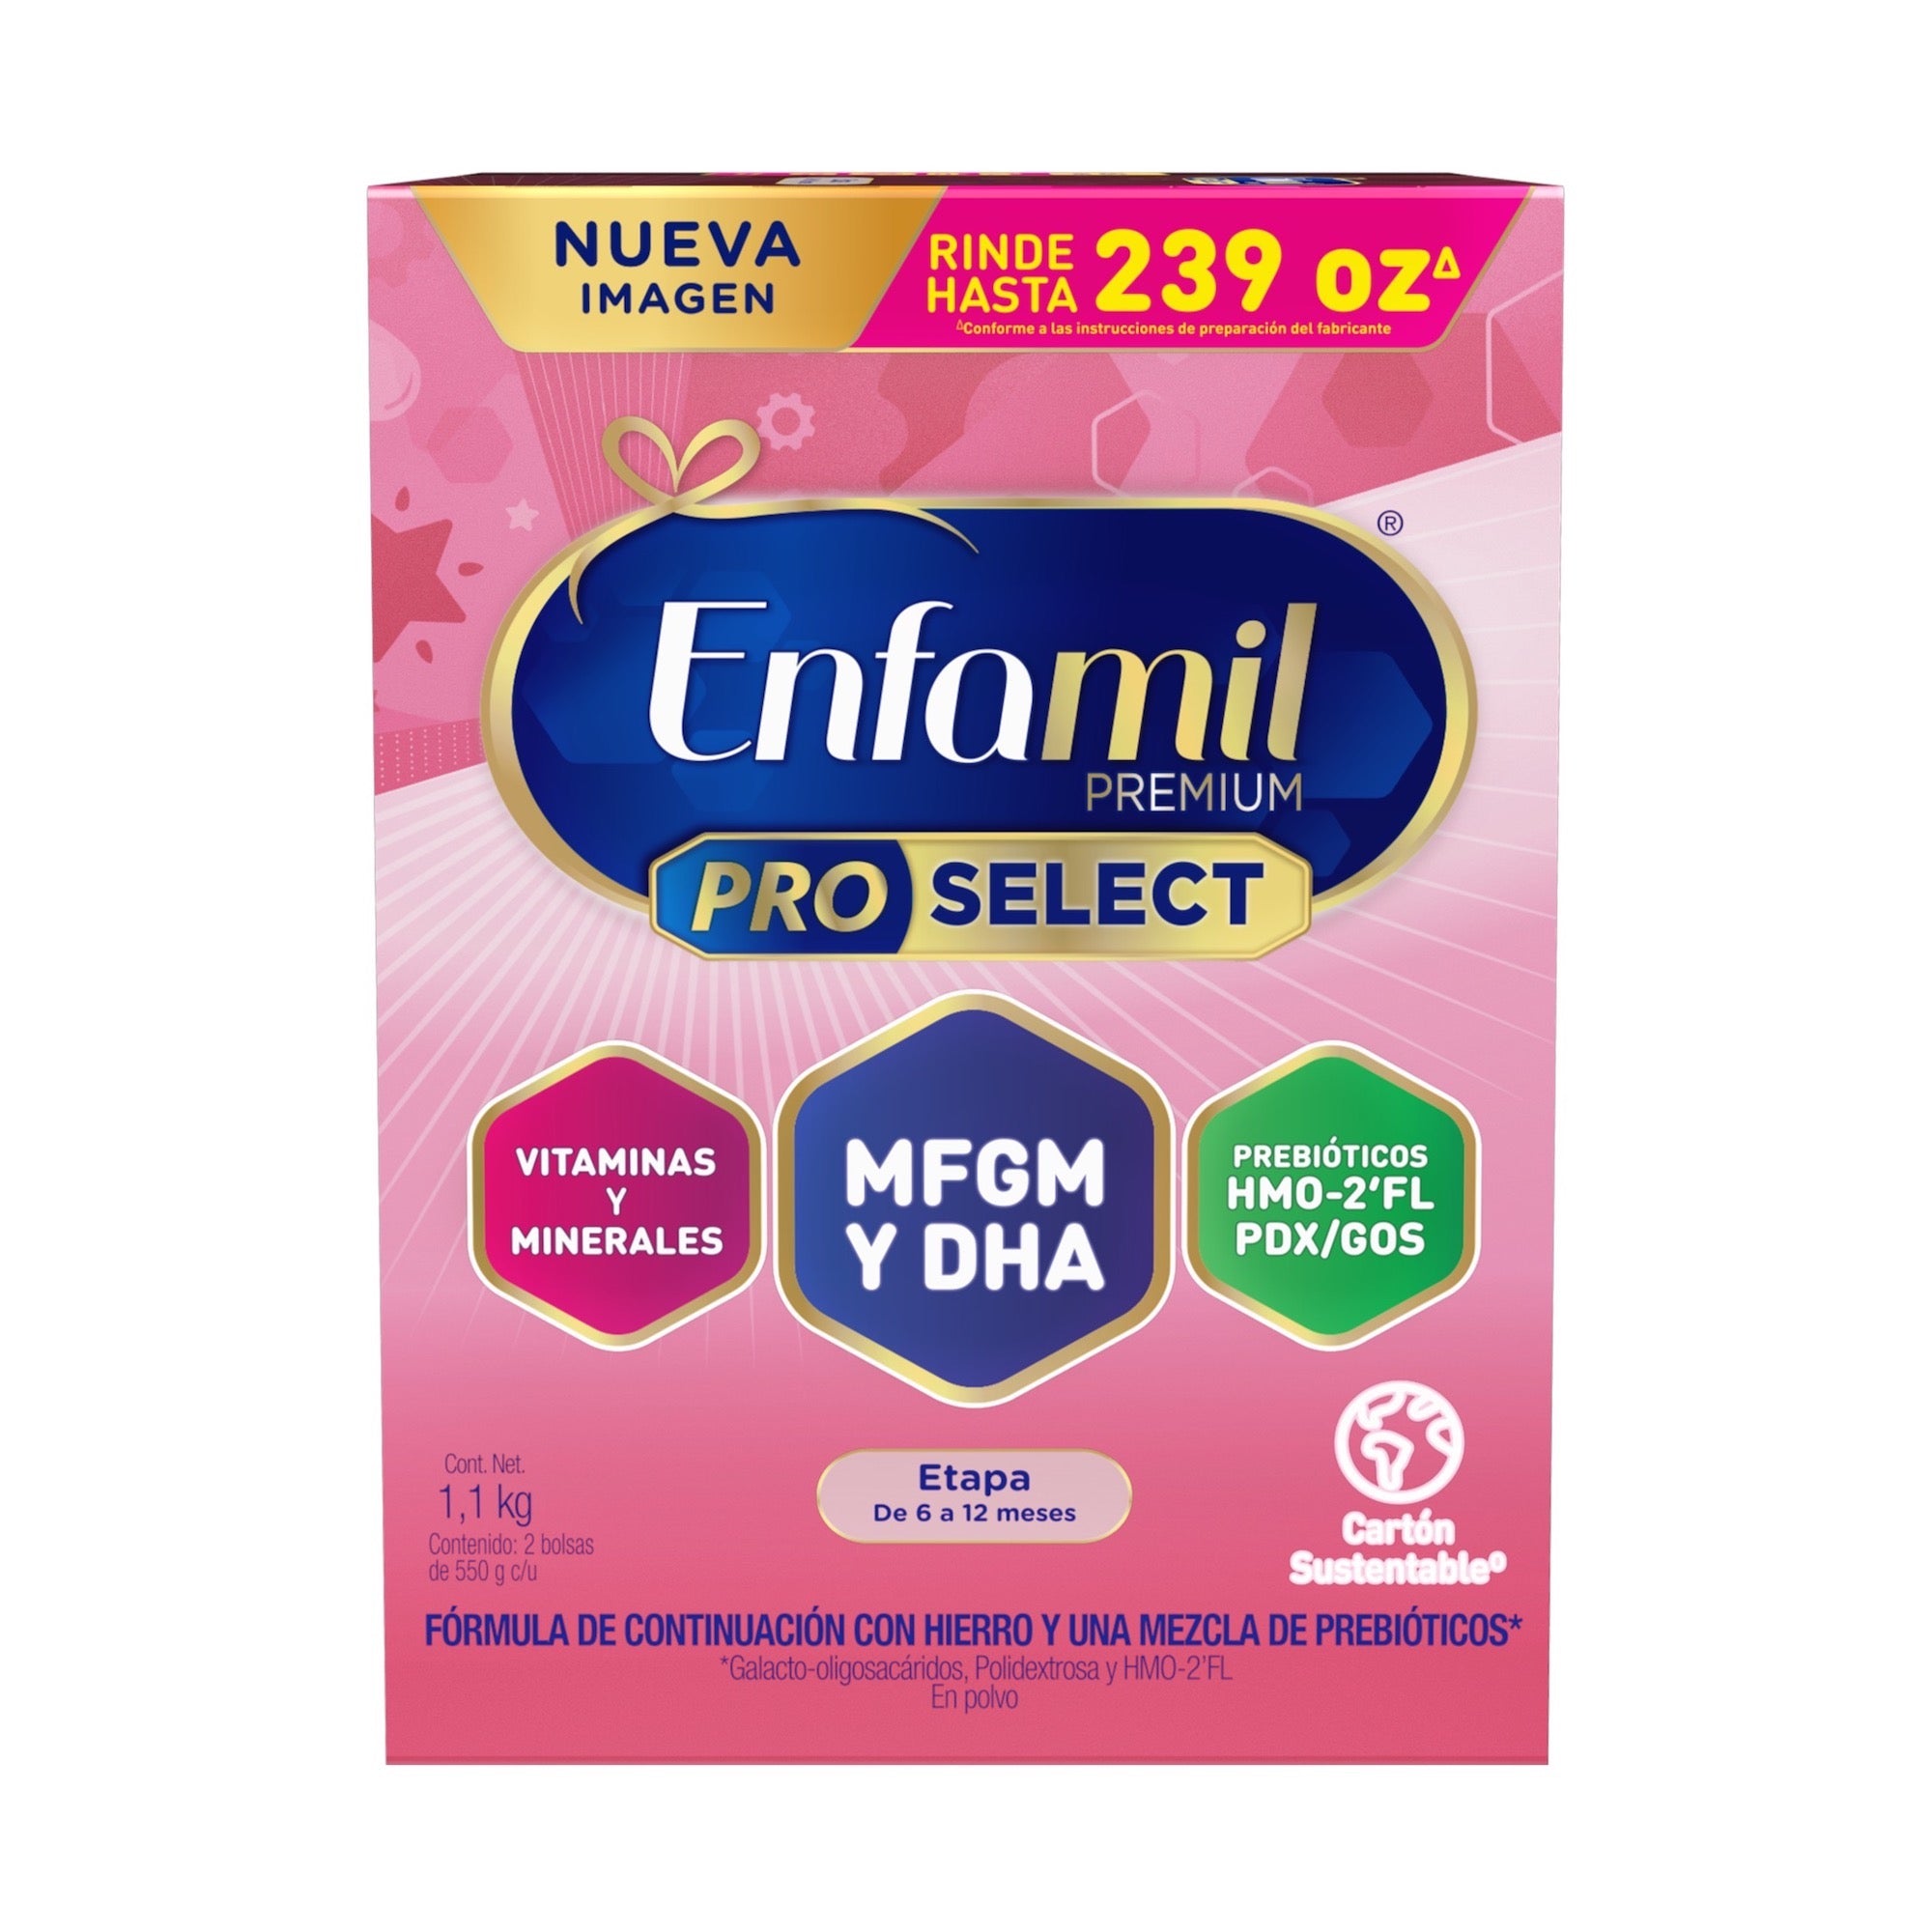 Enfamil® Premium ProSelect 6-12 meses, Caja de 1,1 kgs.